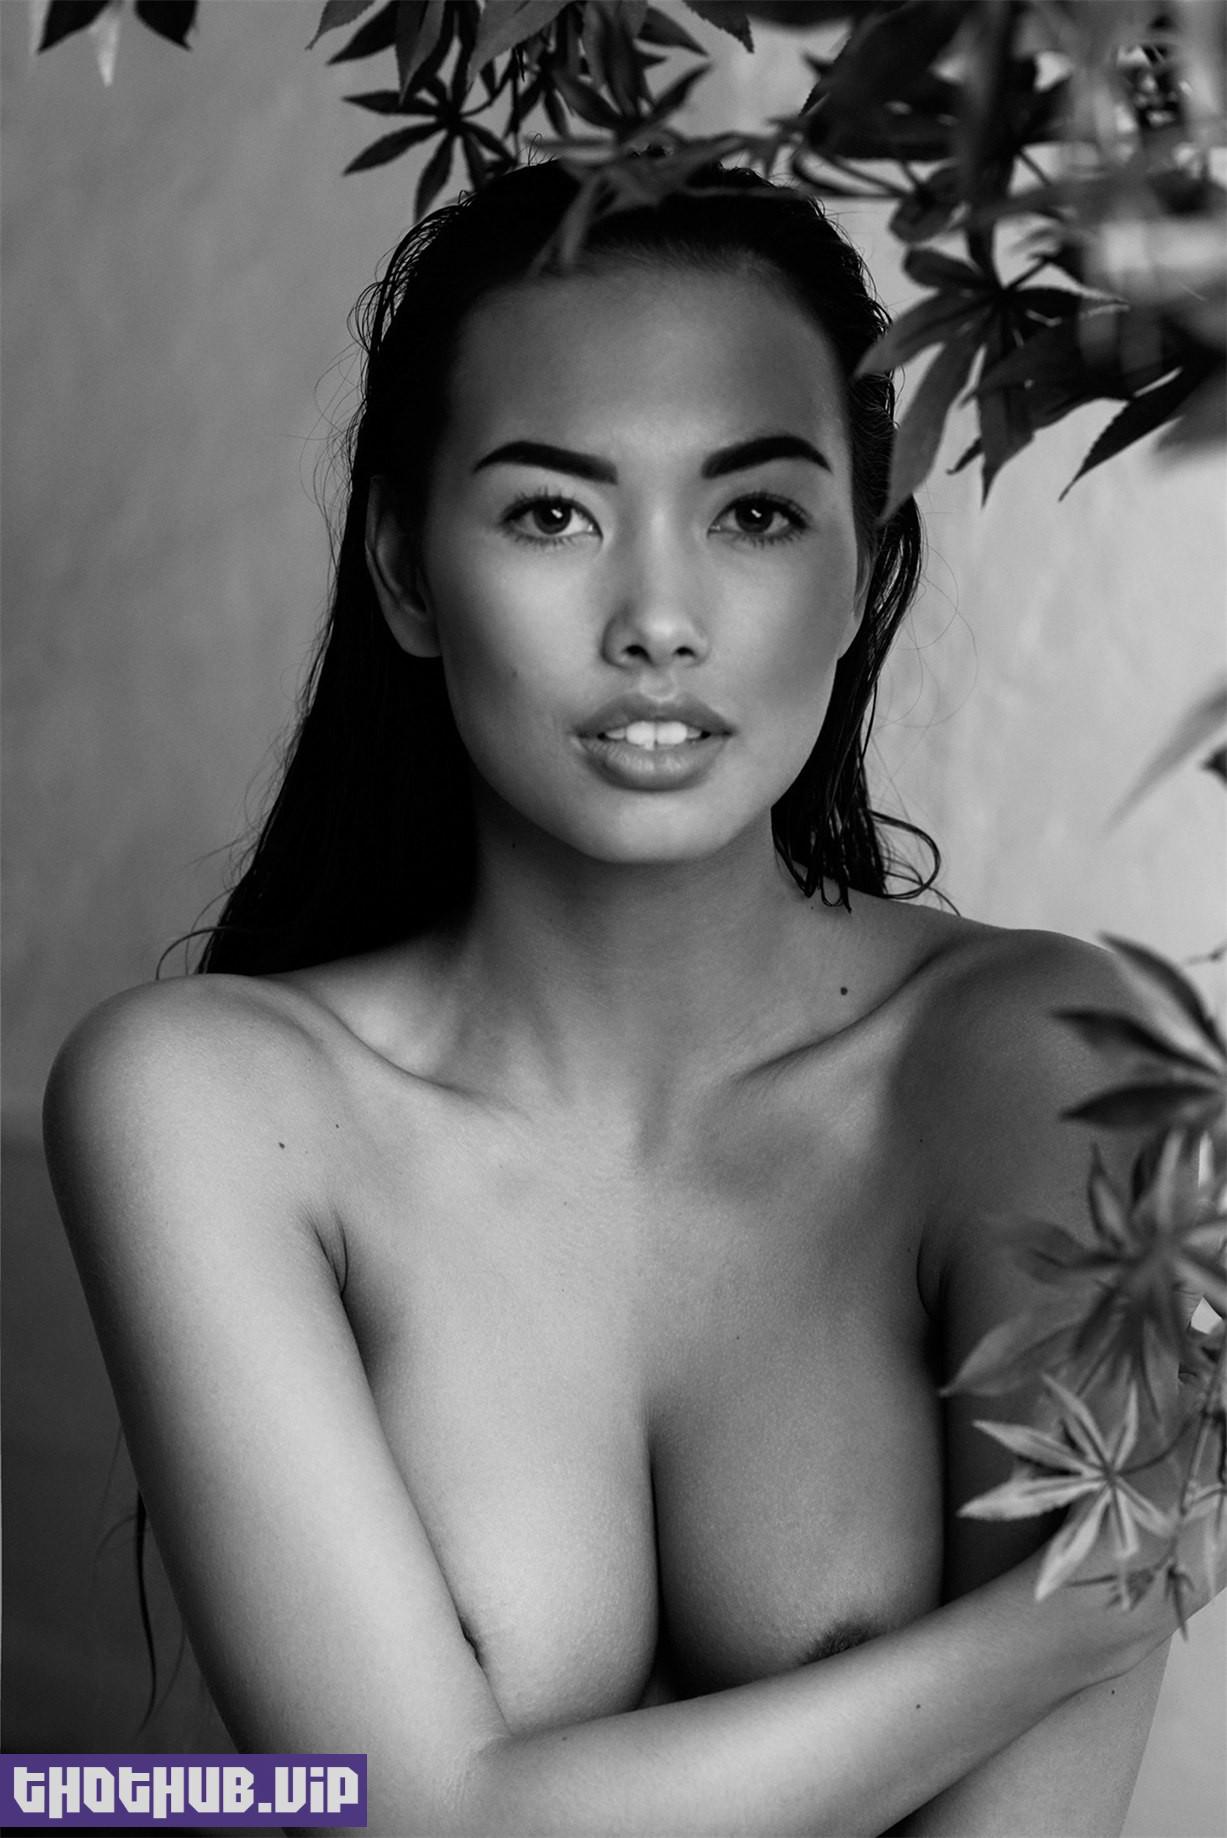 Swedish Model Jennifer Berg Nude Photo Shoot